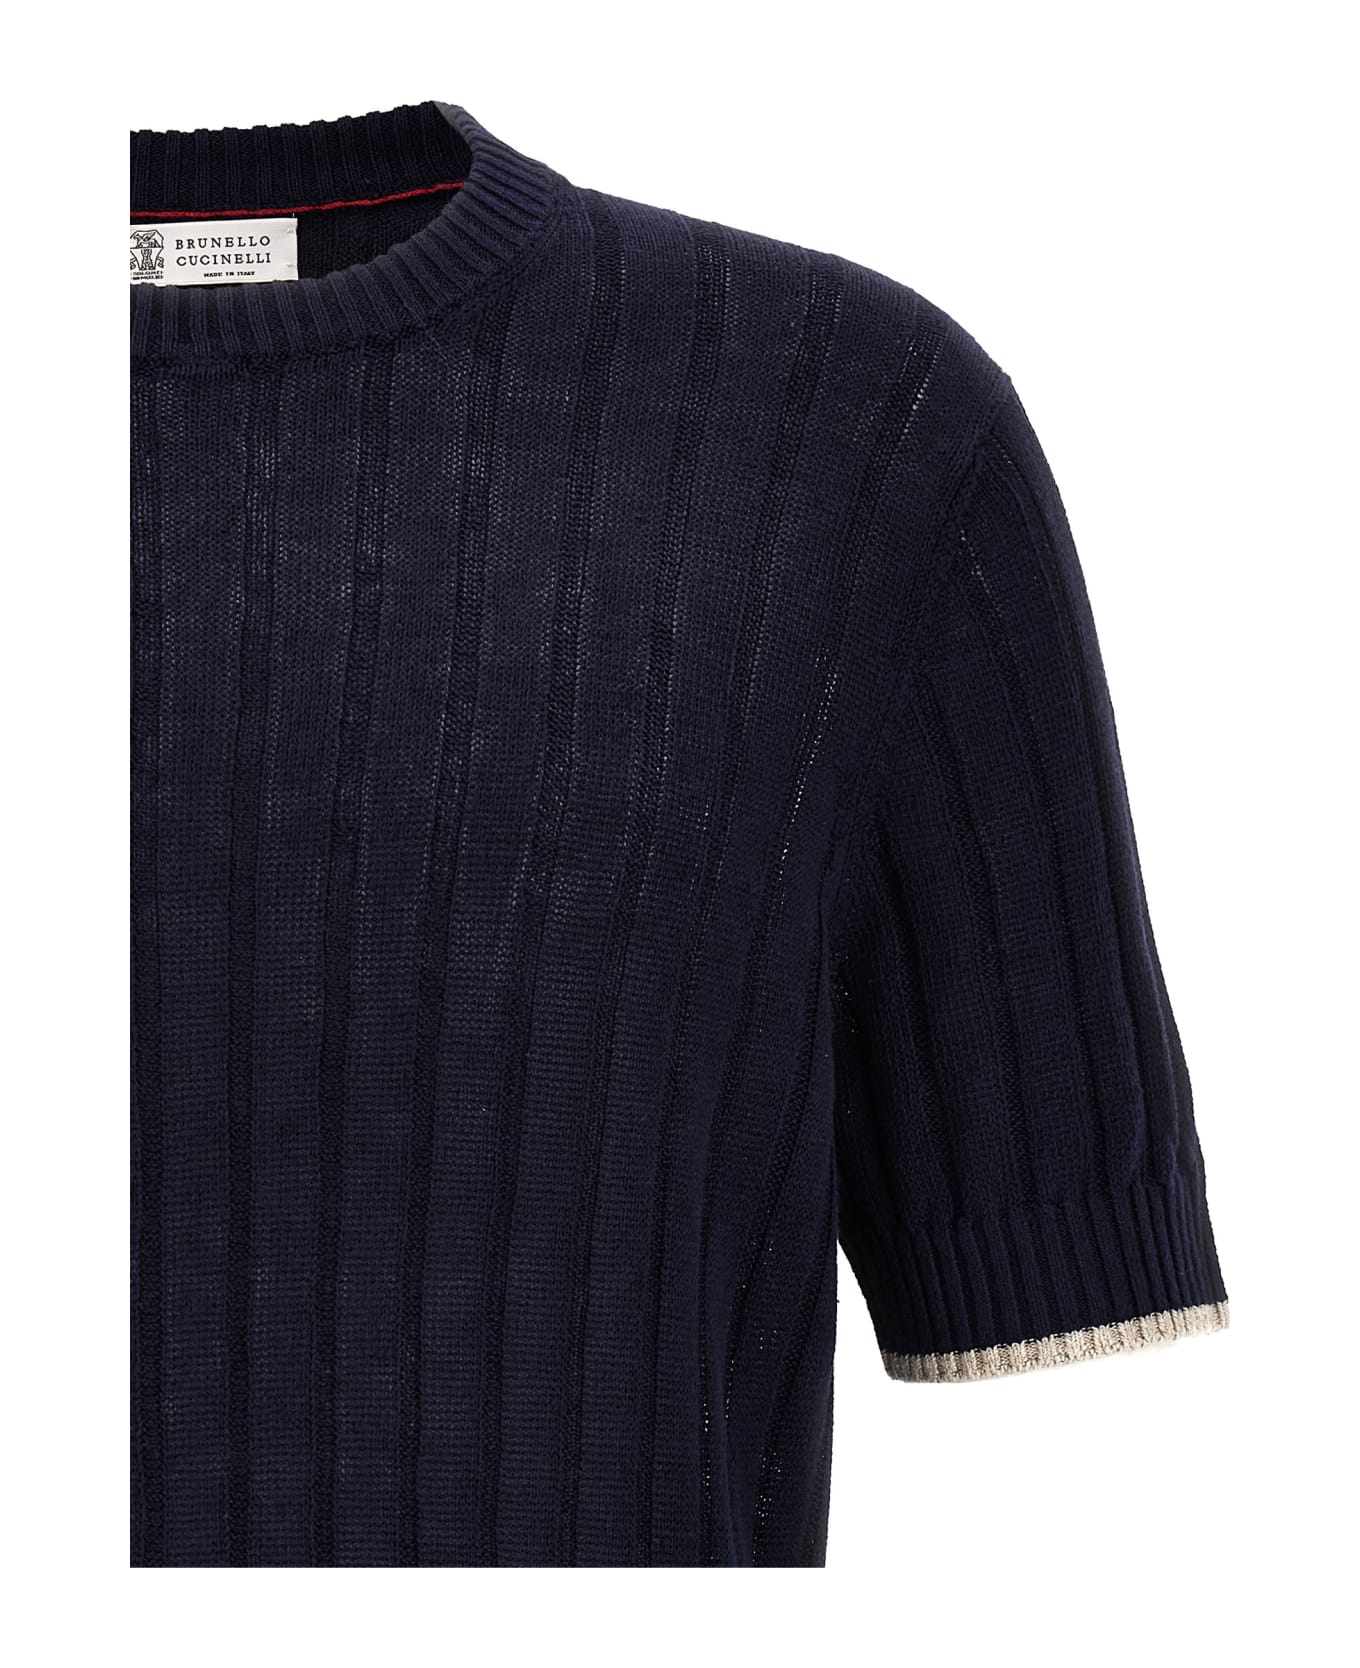 Brunello Cucinelli Ribbed Sweater - Blue